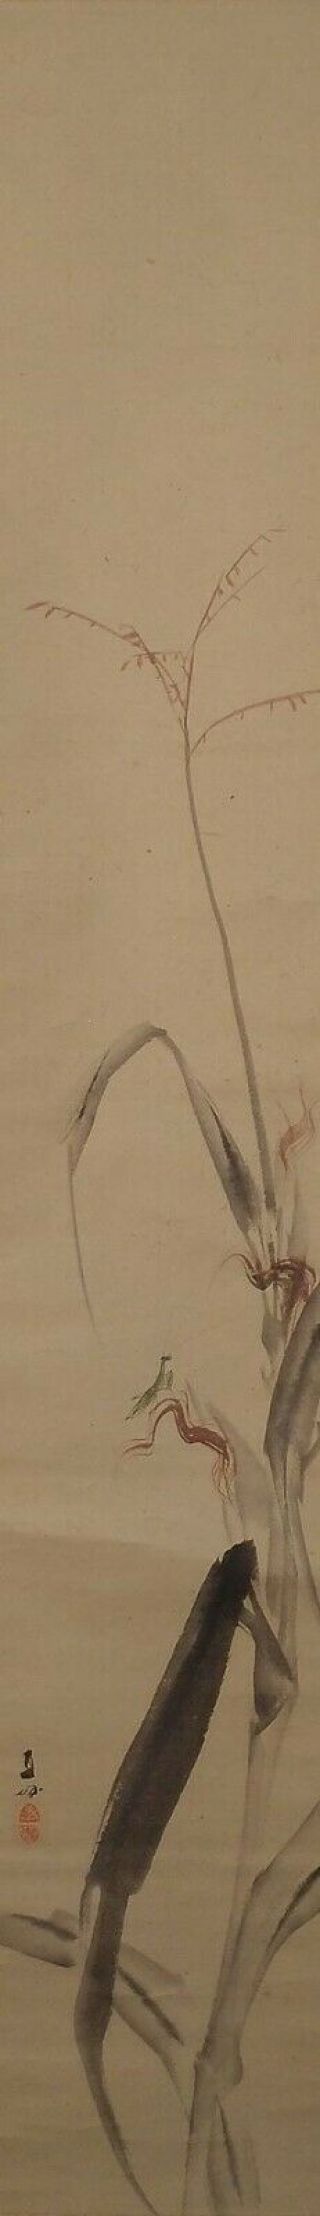 2001 Japanese Hanging Scroll: Mantis On Corn By Fukada Chokujo